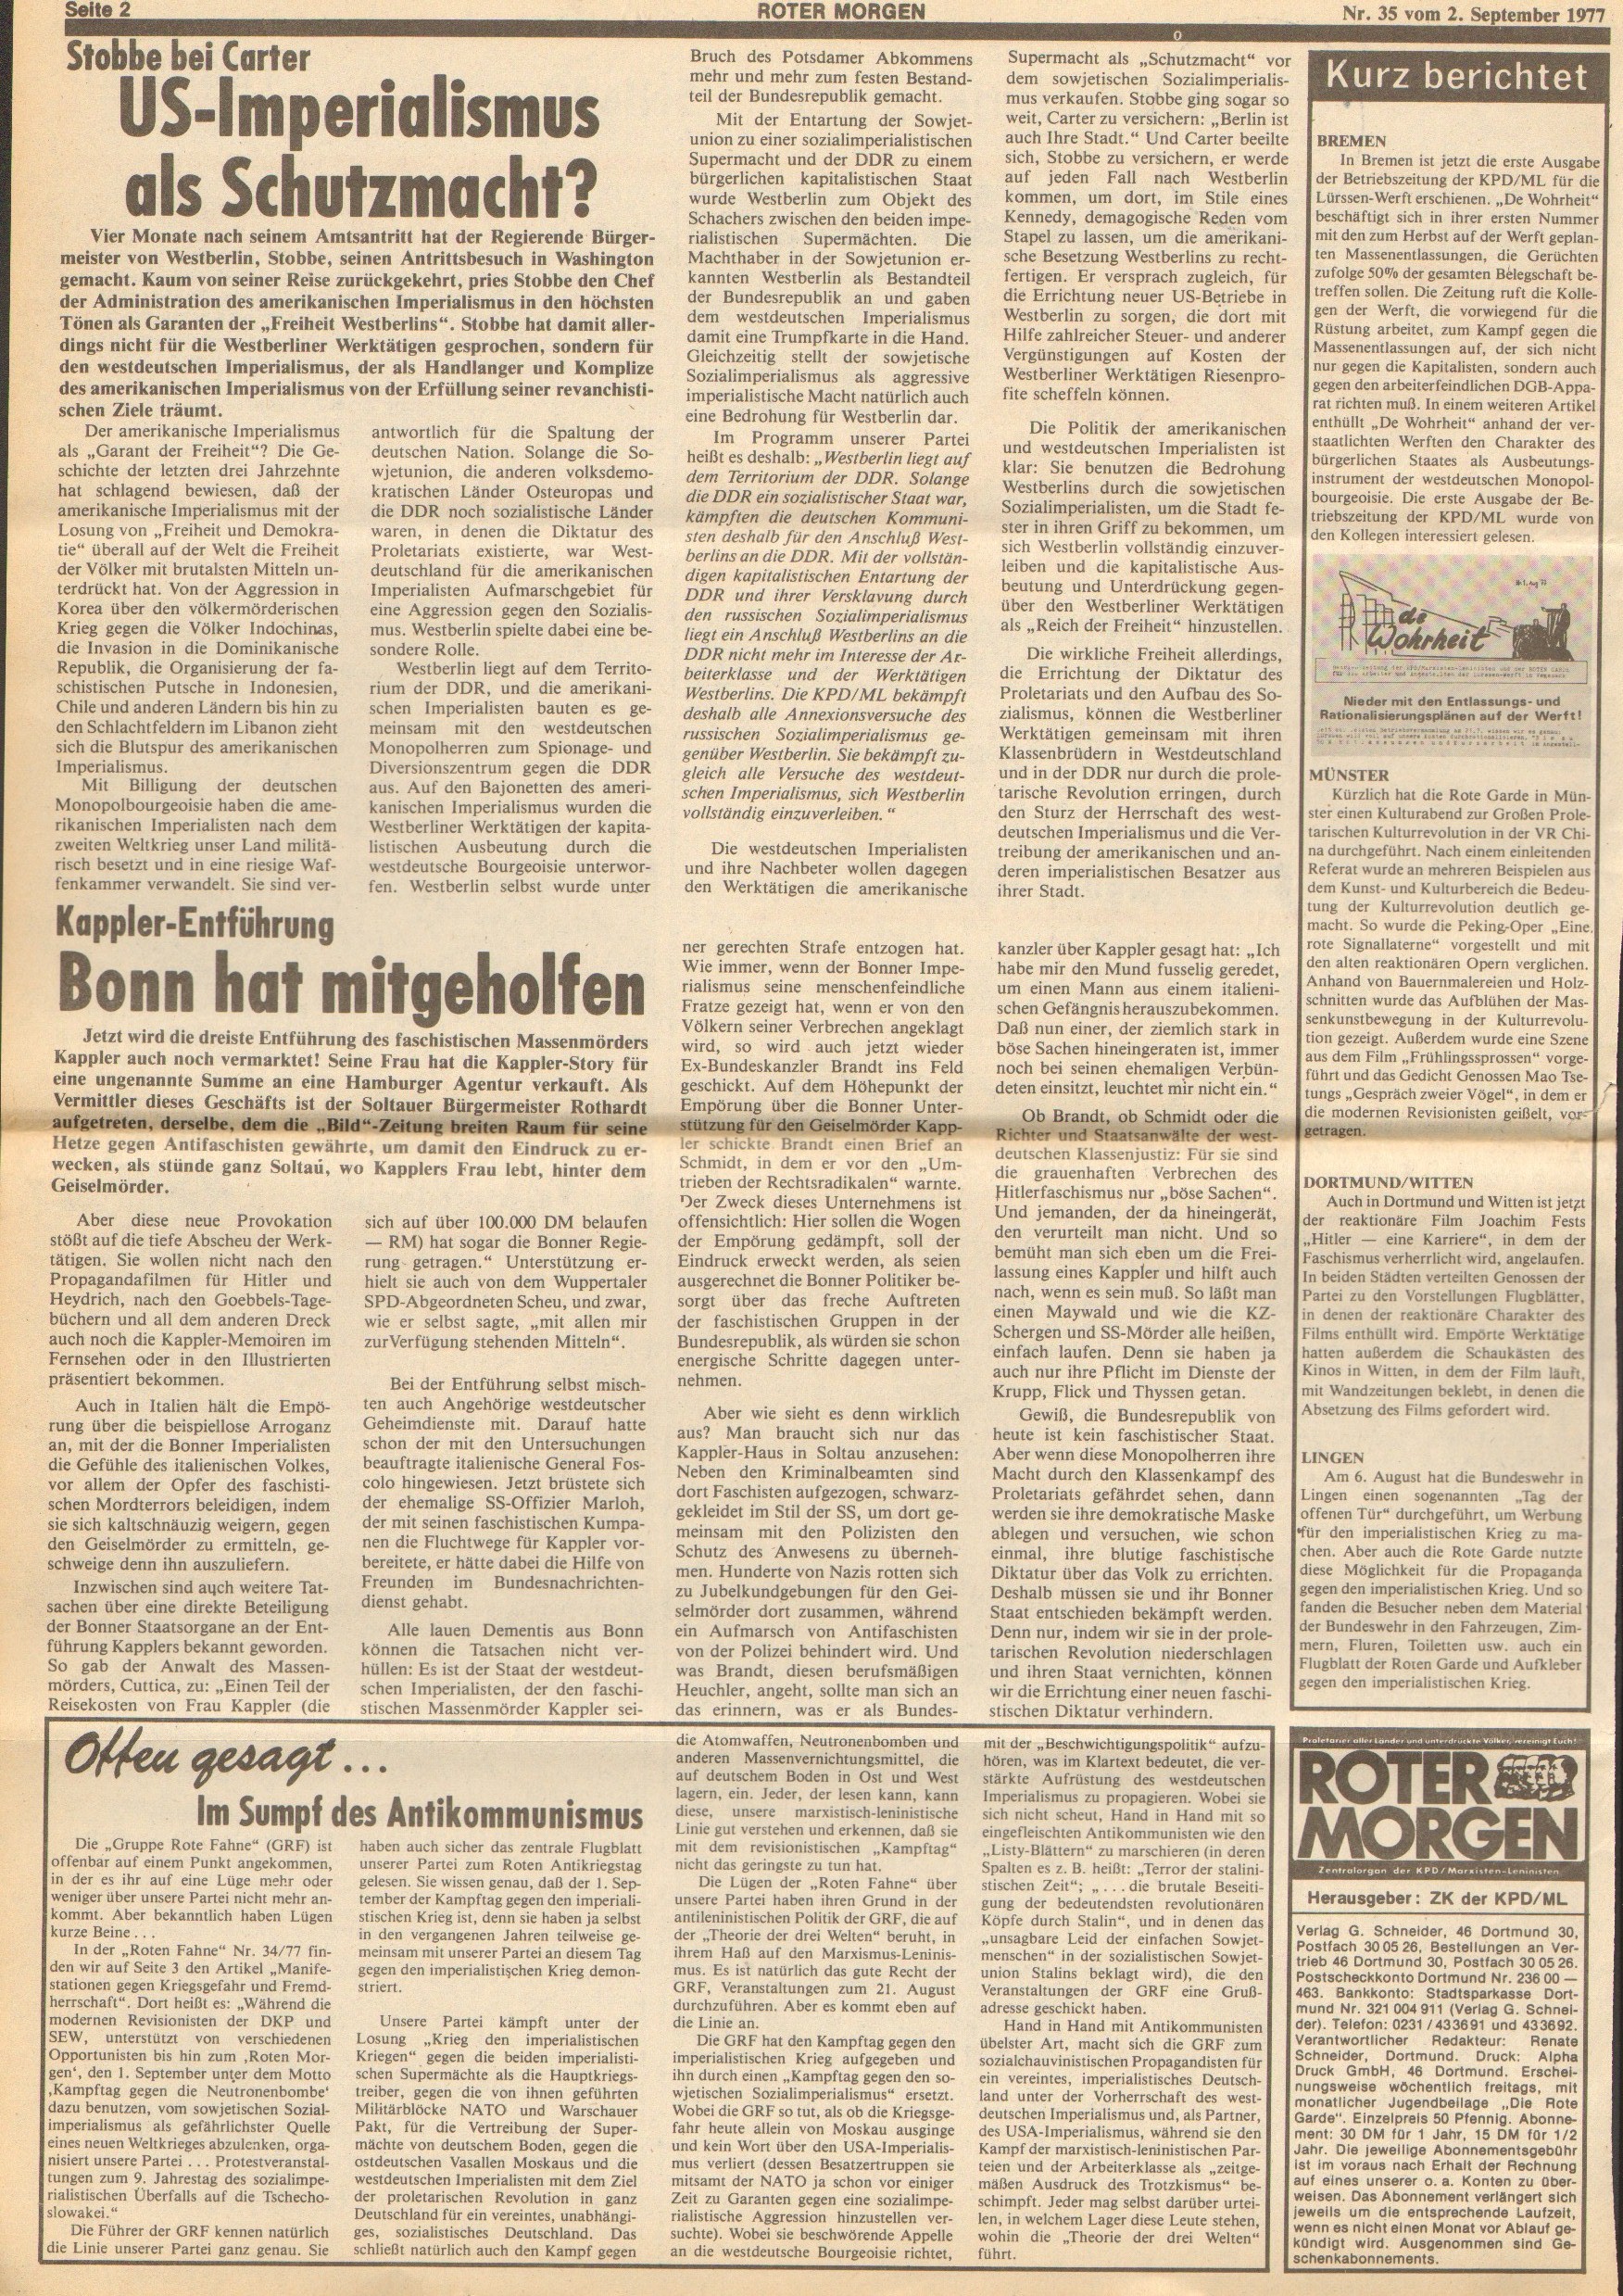 Roter Morgen, 11. Jg., 2. September 1977, Nr. 35, Seite 2